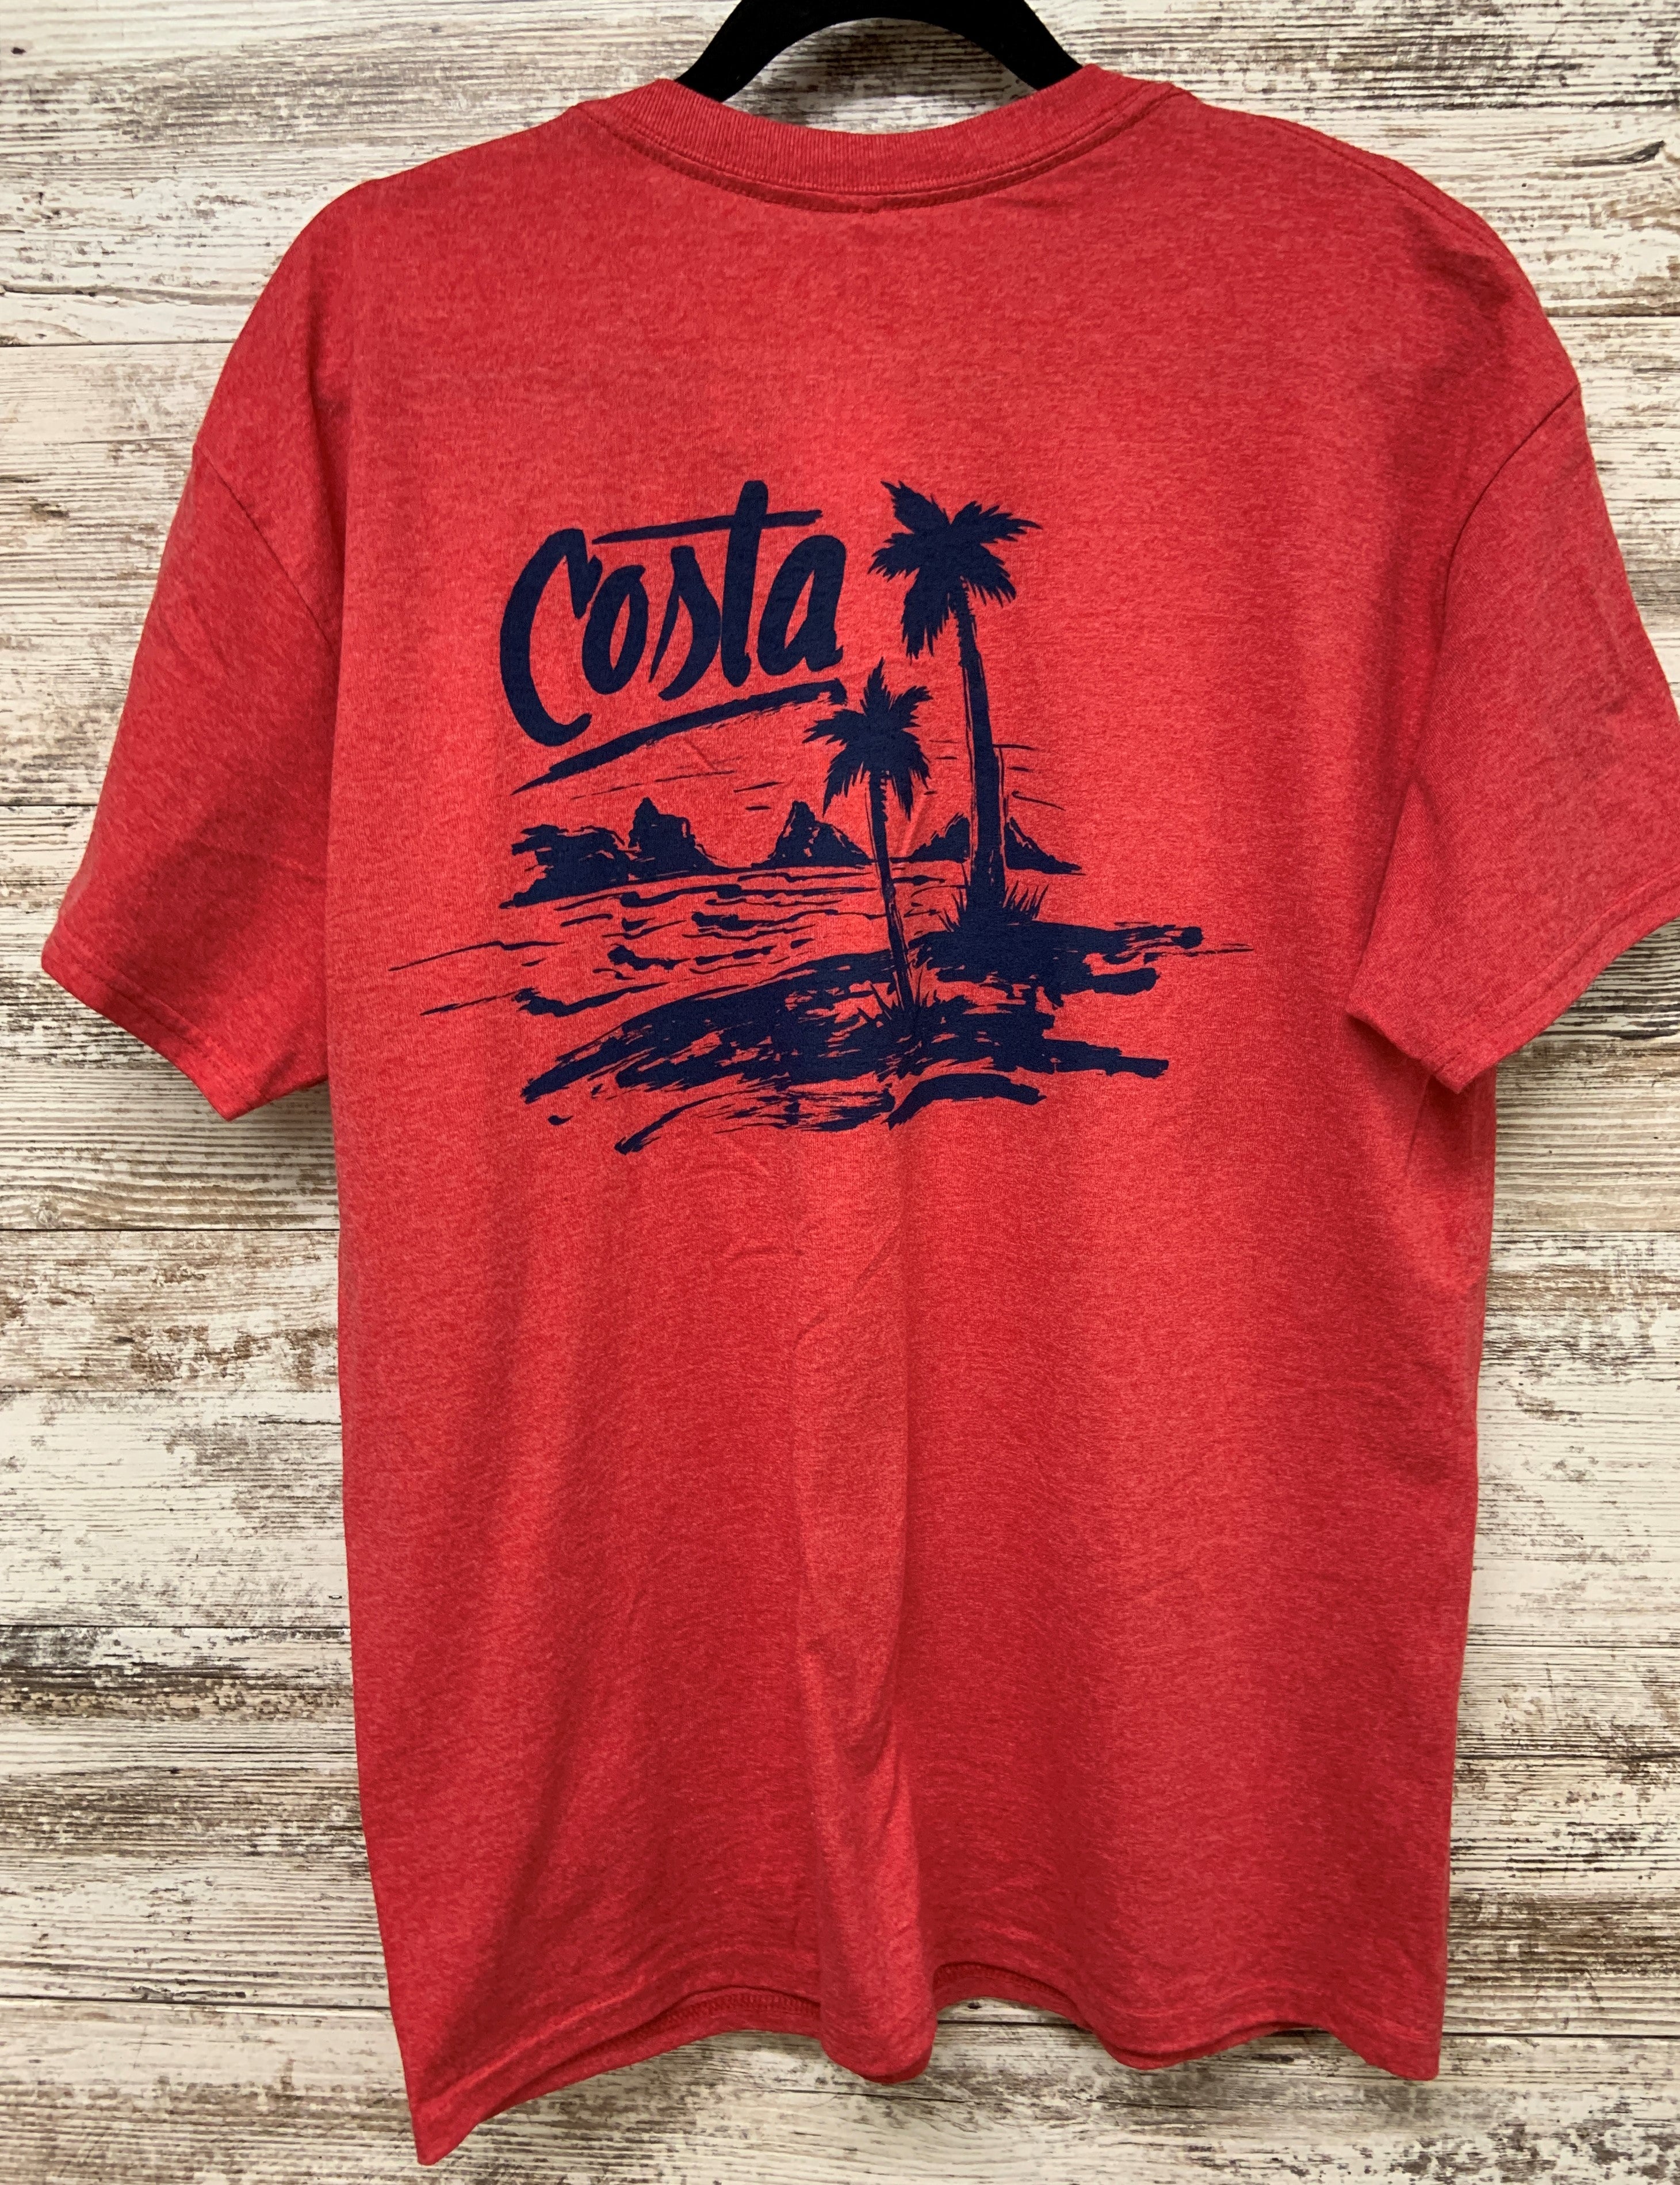 Hook 'Em Costa T-Shirt - Shirts & Tops - Costa - Butch's Tackle & Marine -  Torch Lake Apparel, Sweatshirts, Gifts & Tritoon Rentals